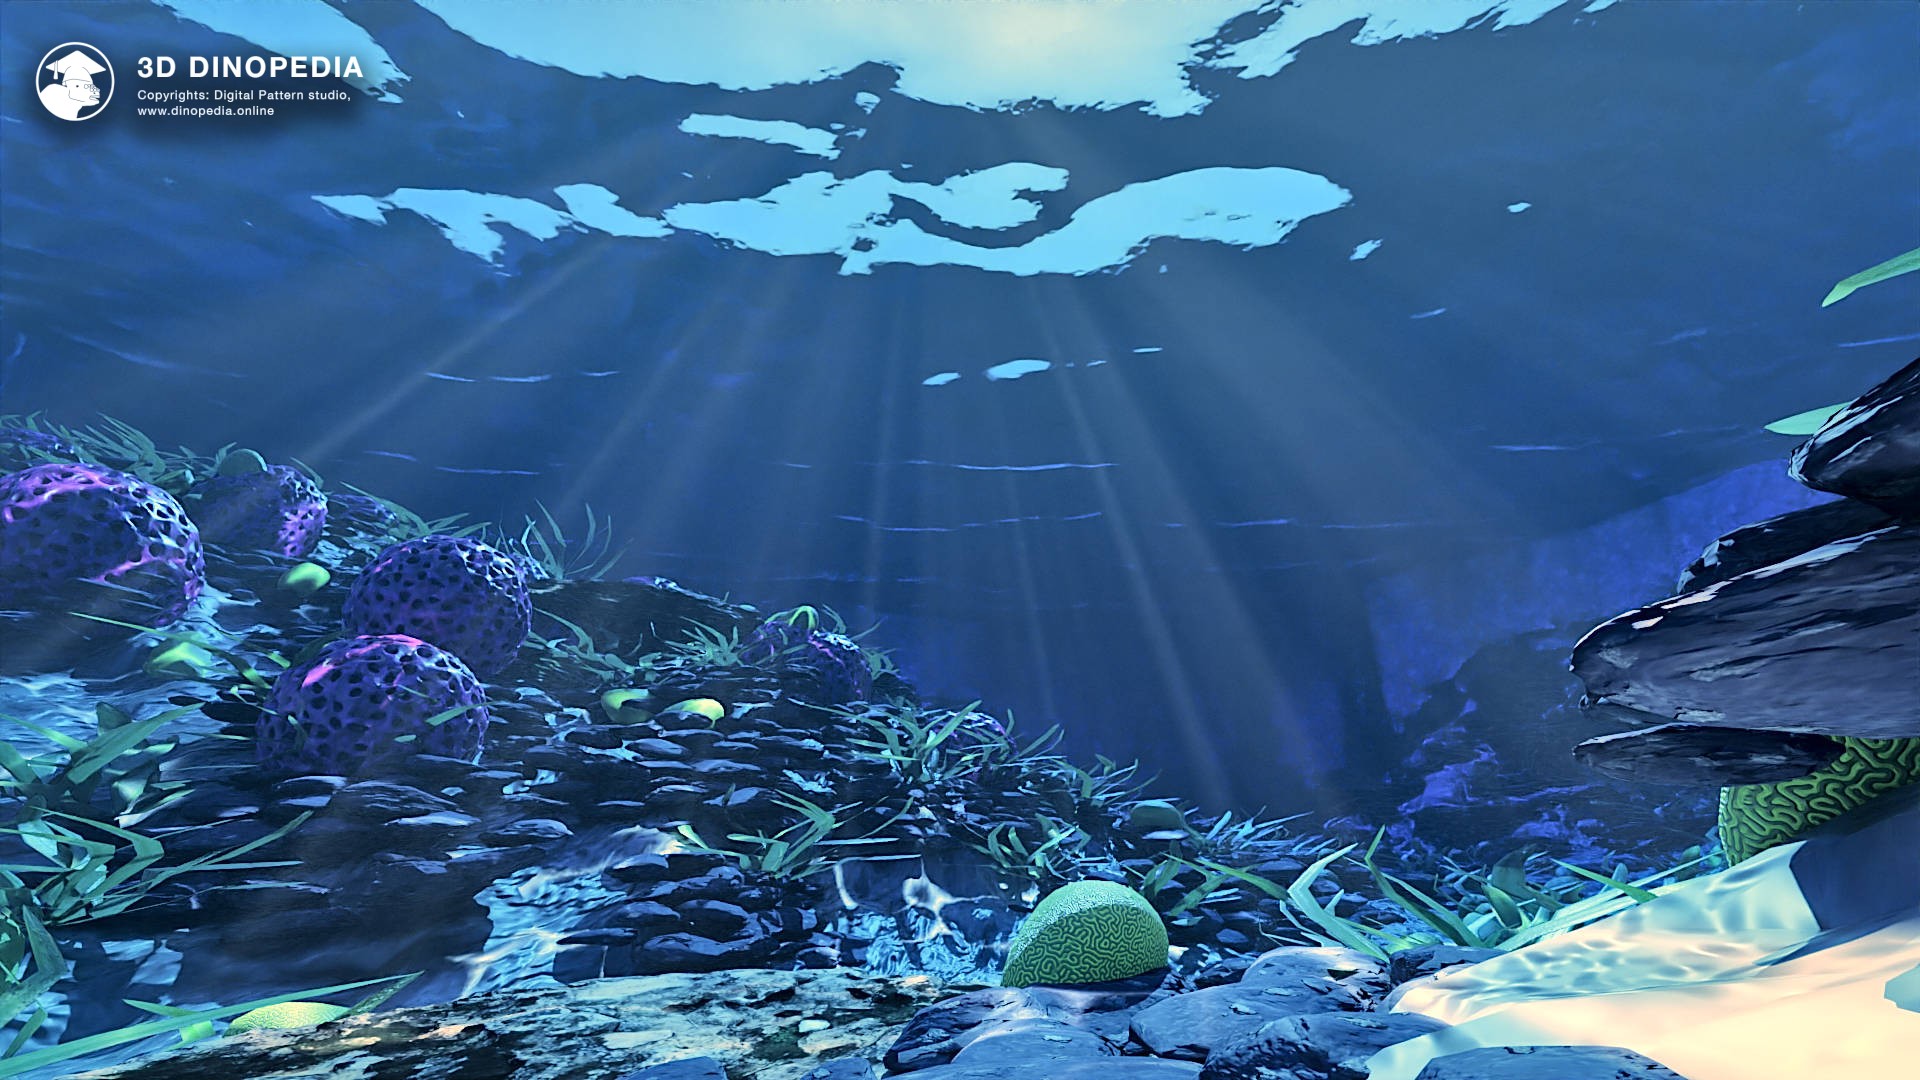 3D Dinopedia New 3D Biome - Paleogene Marine Environment